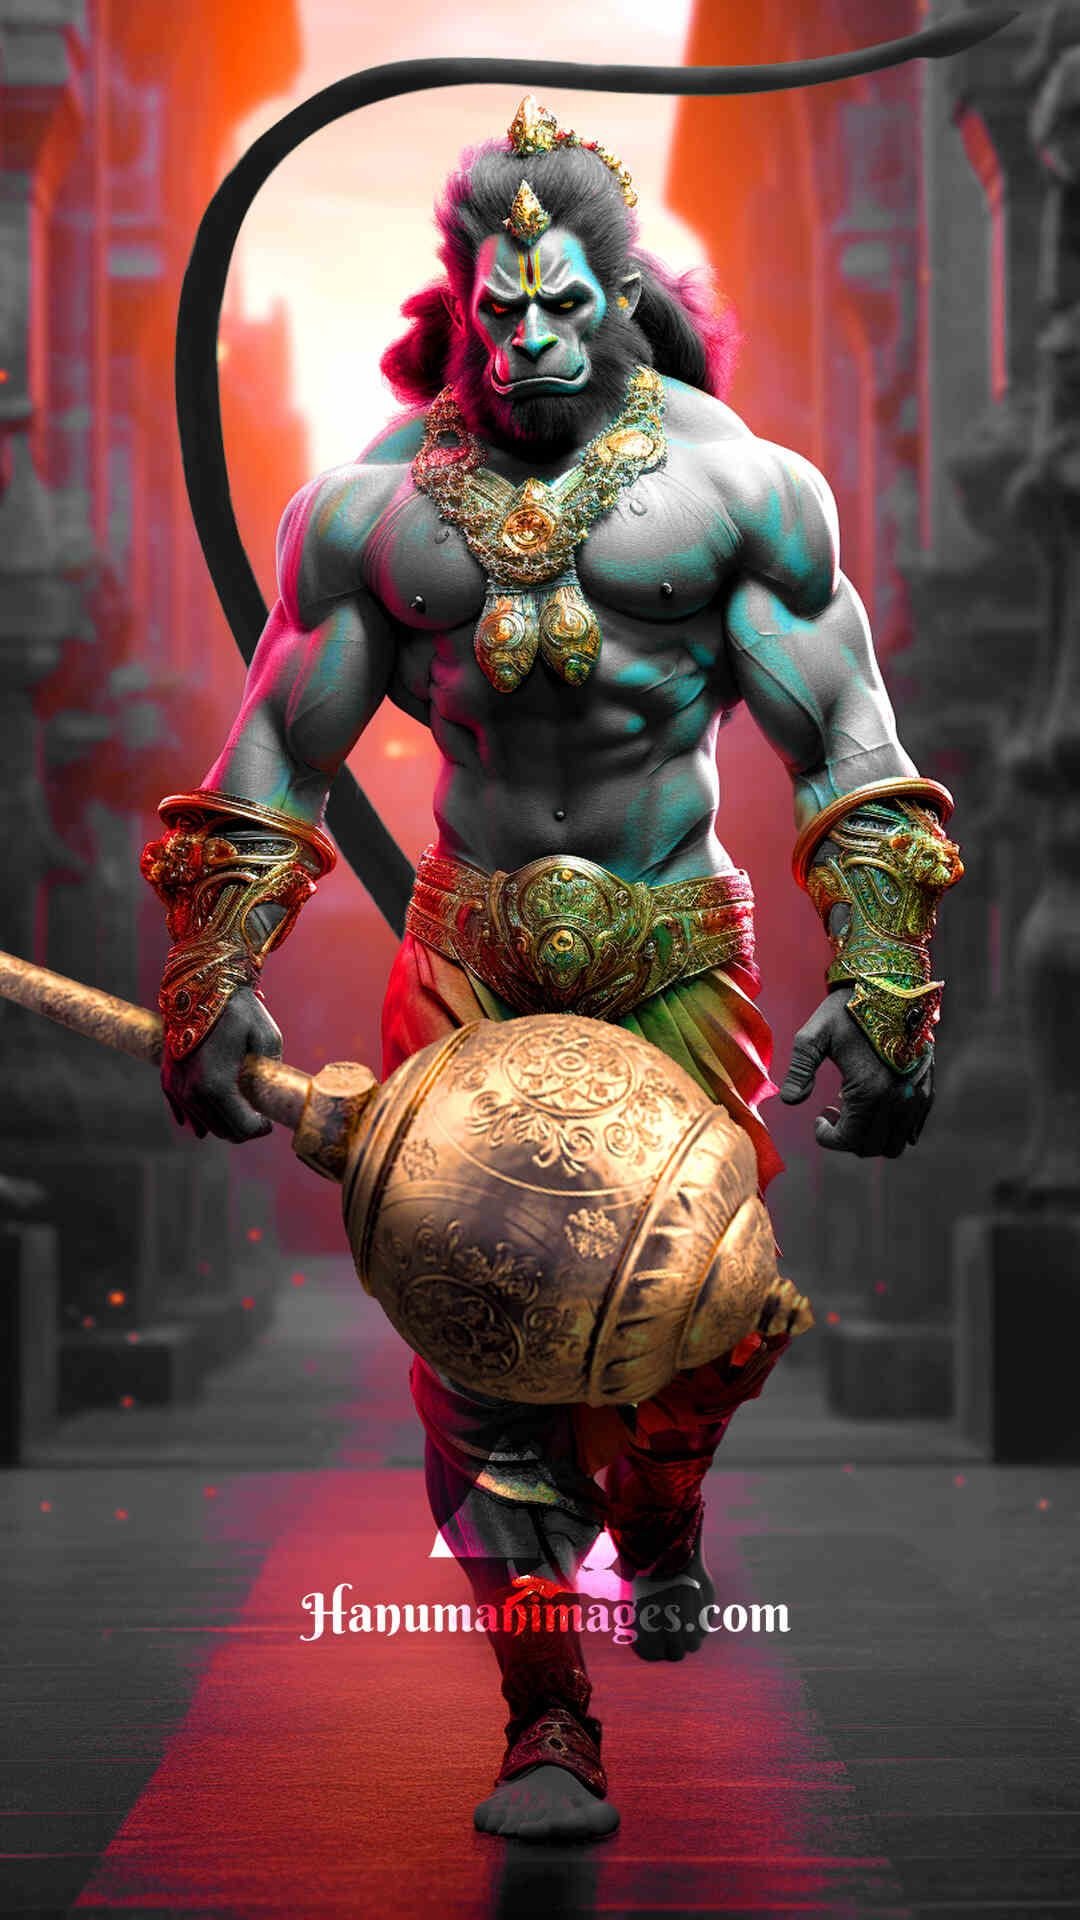 Angry Full HD Hanuman Wallpaper